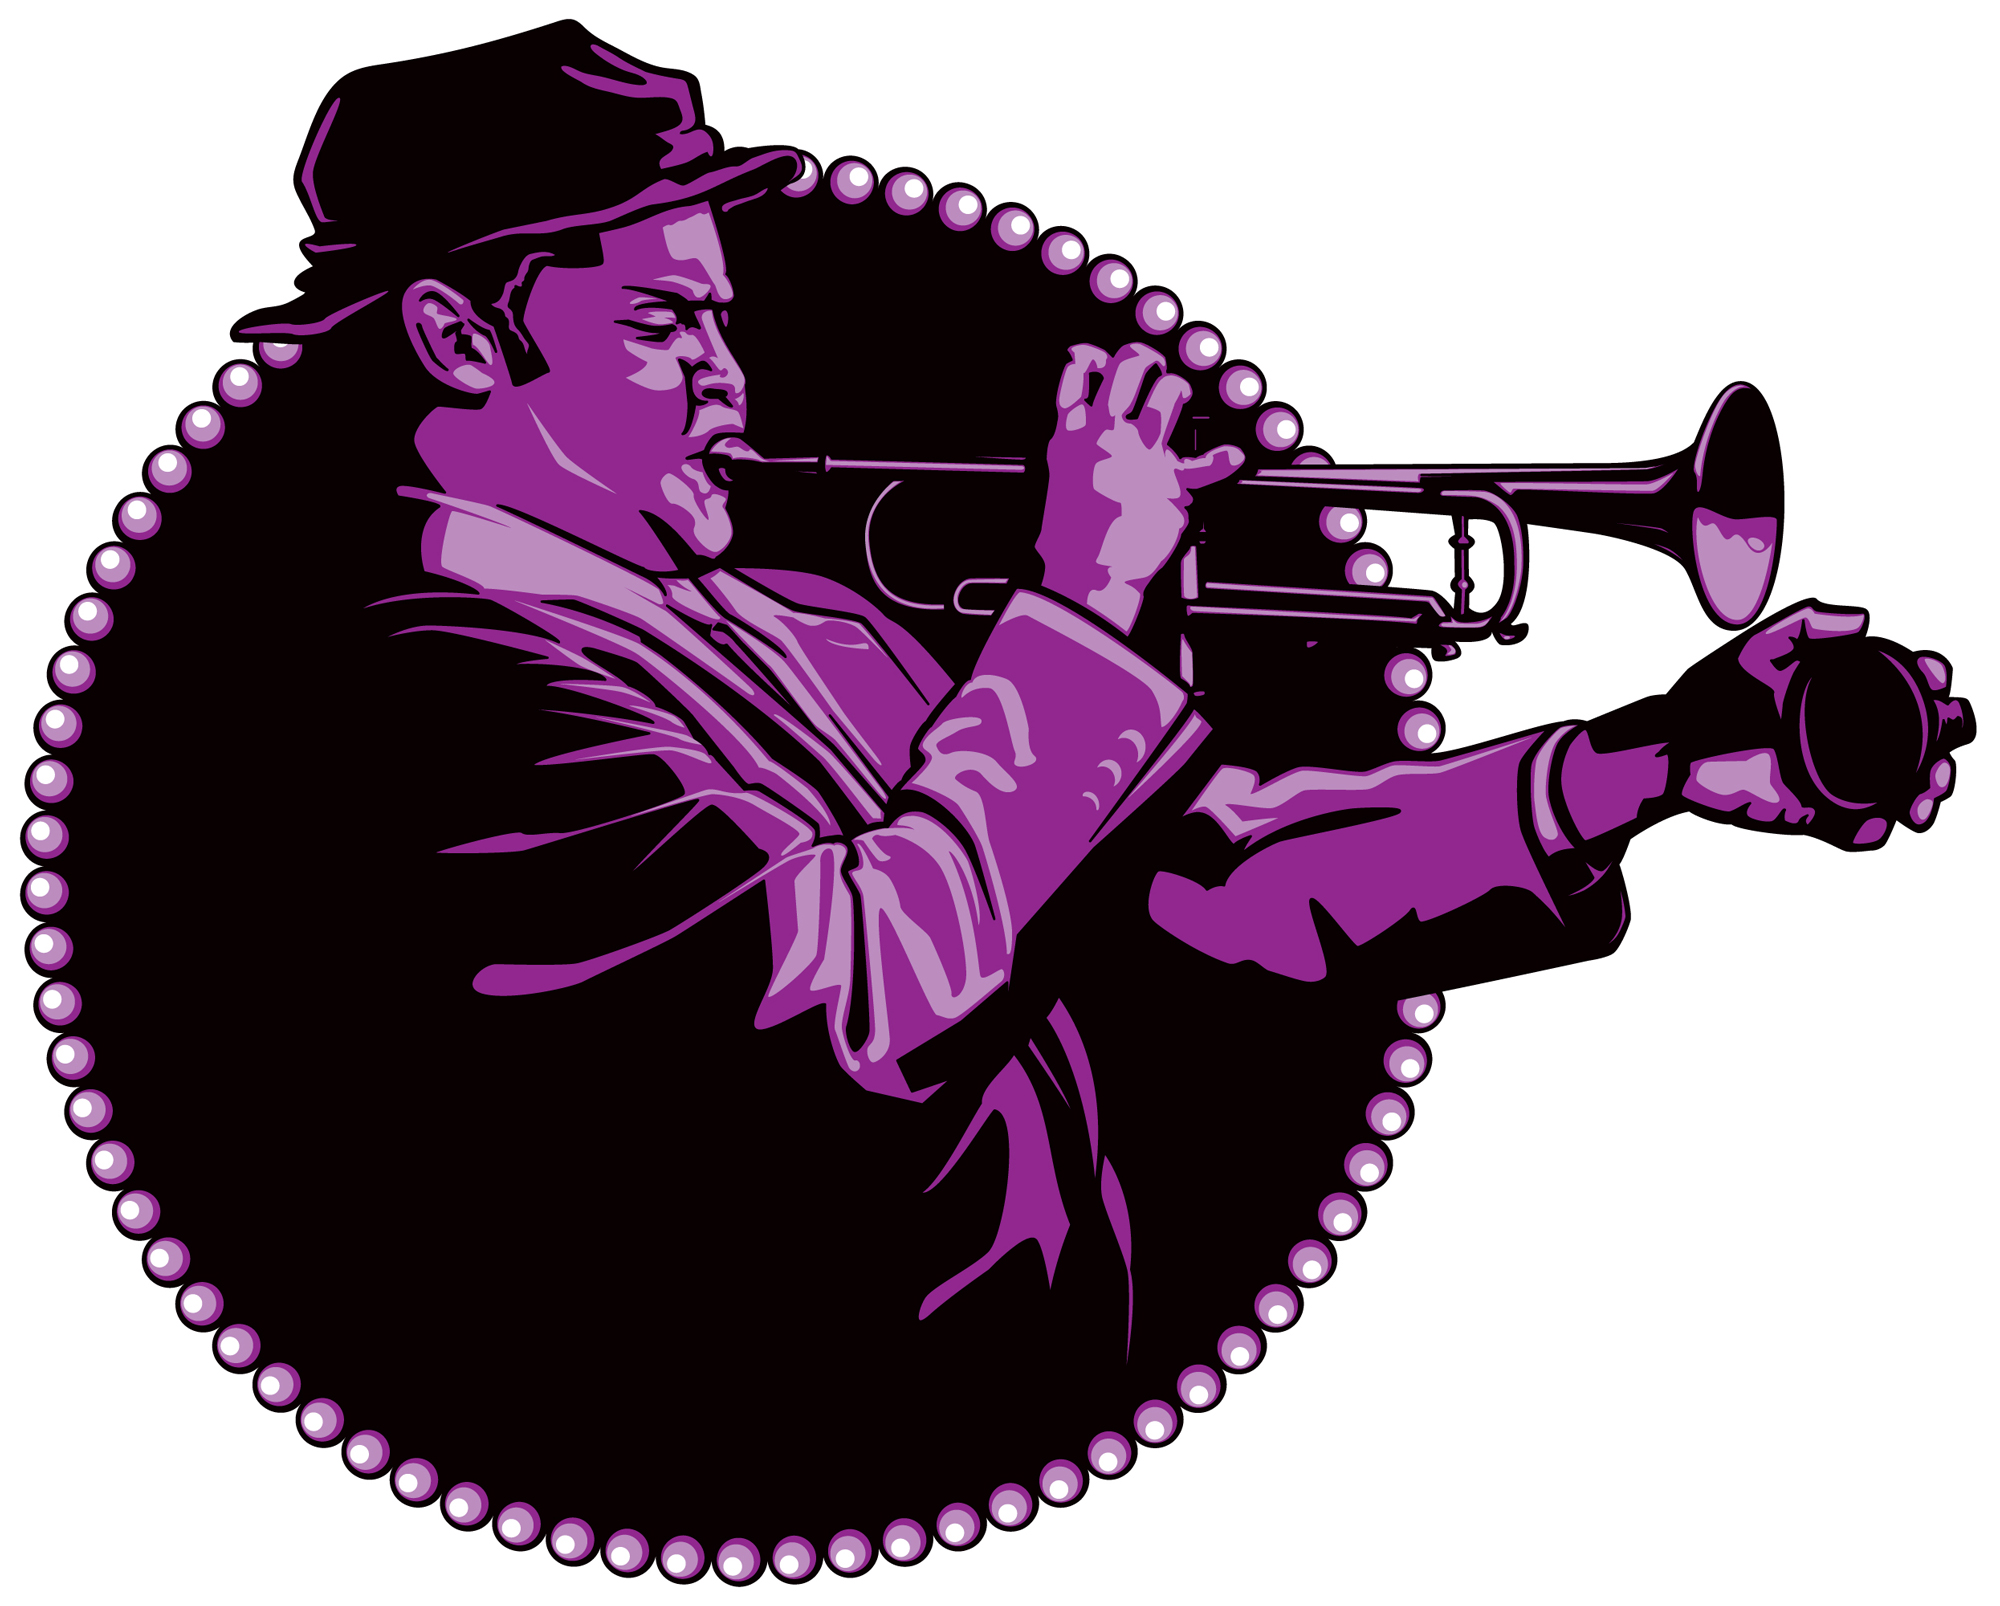 trumpet-guy-2000.jpg